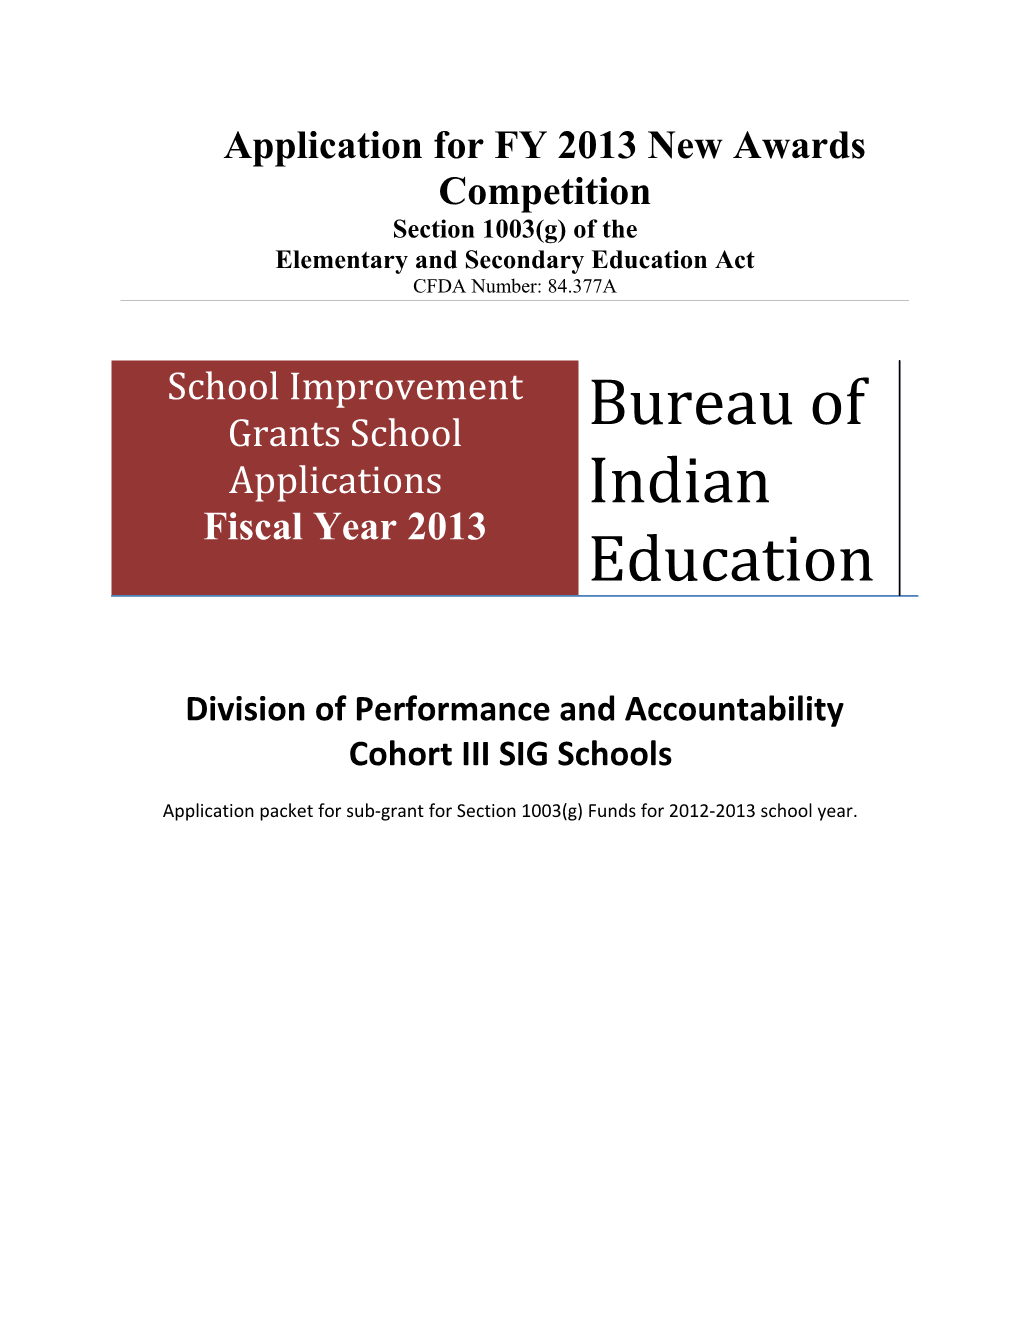 School Improvement Grants Application Packet